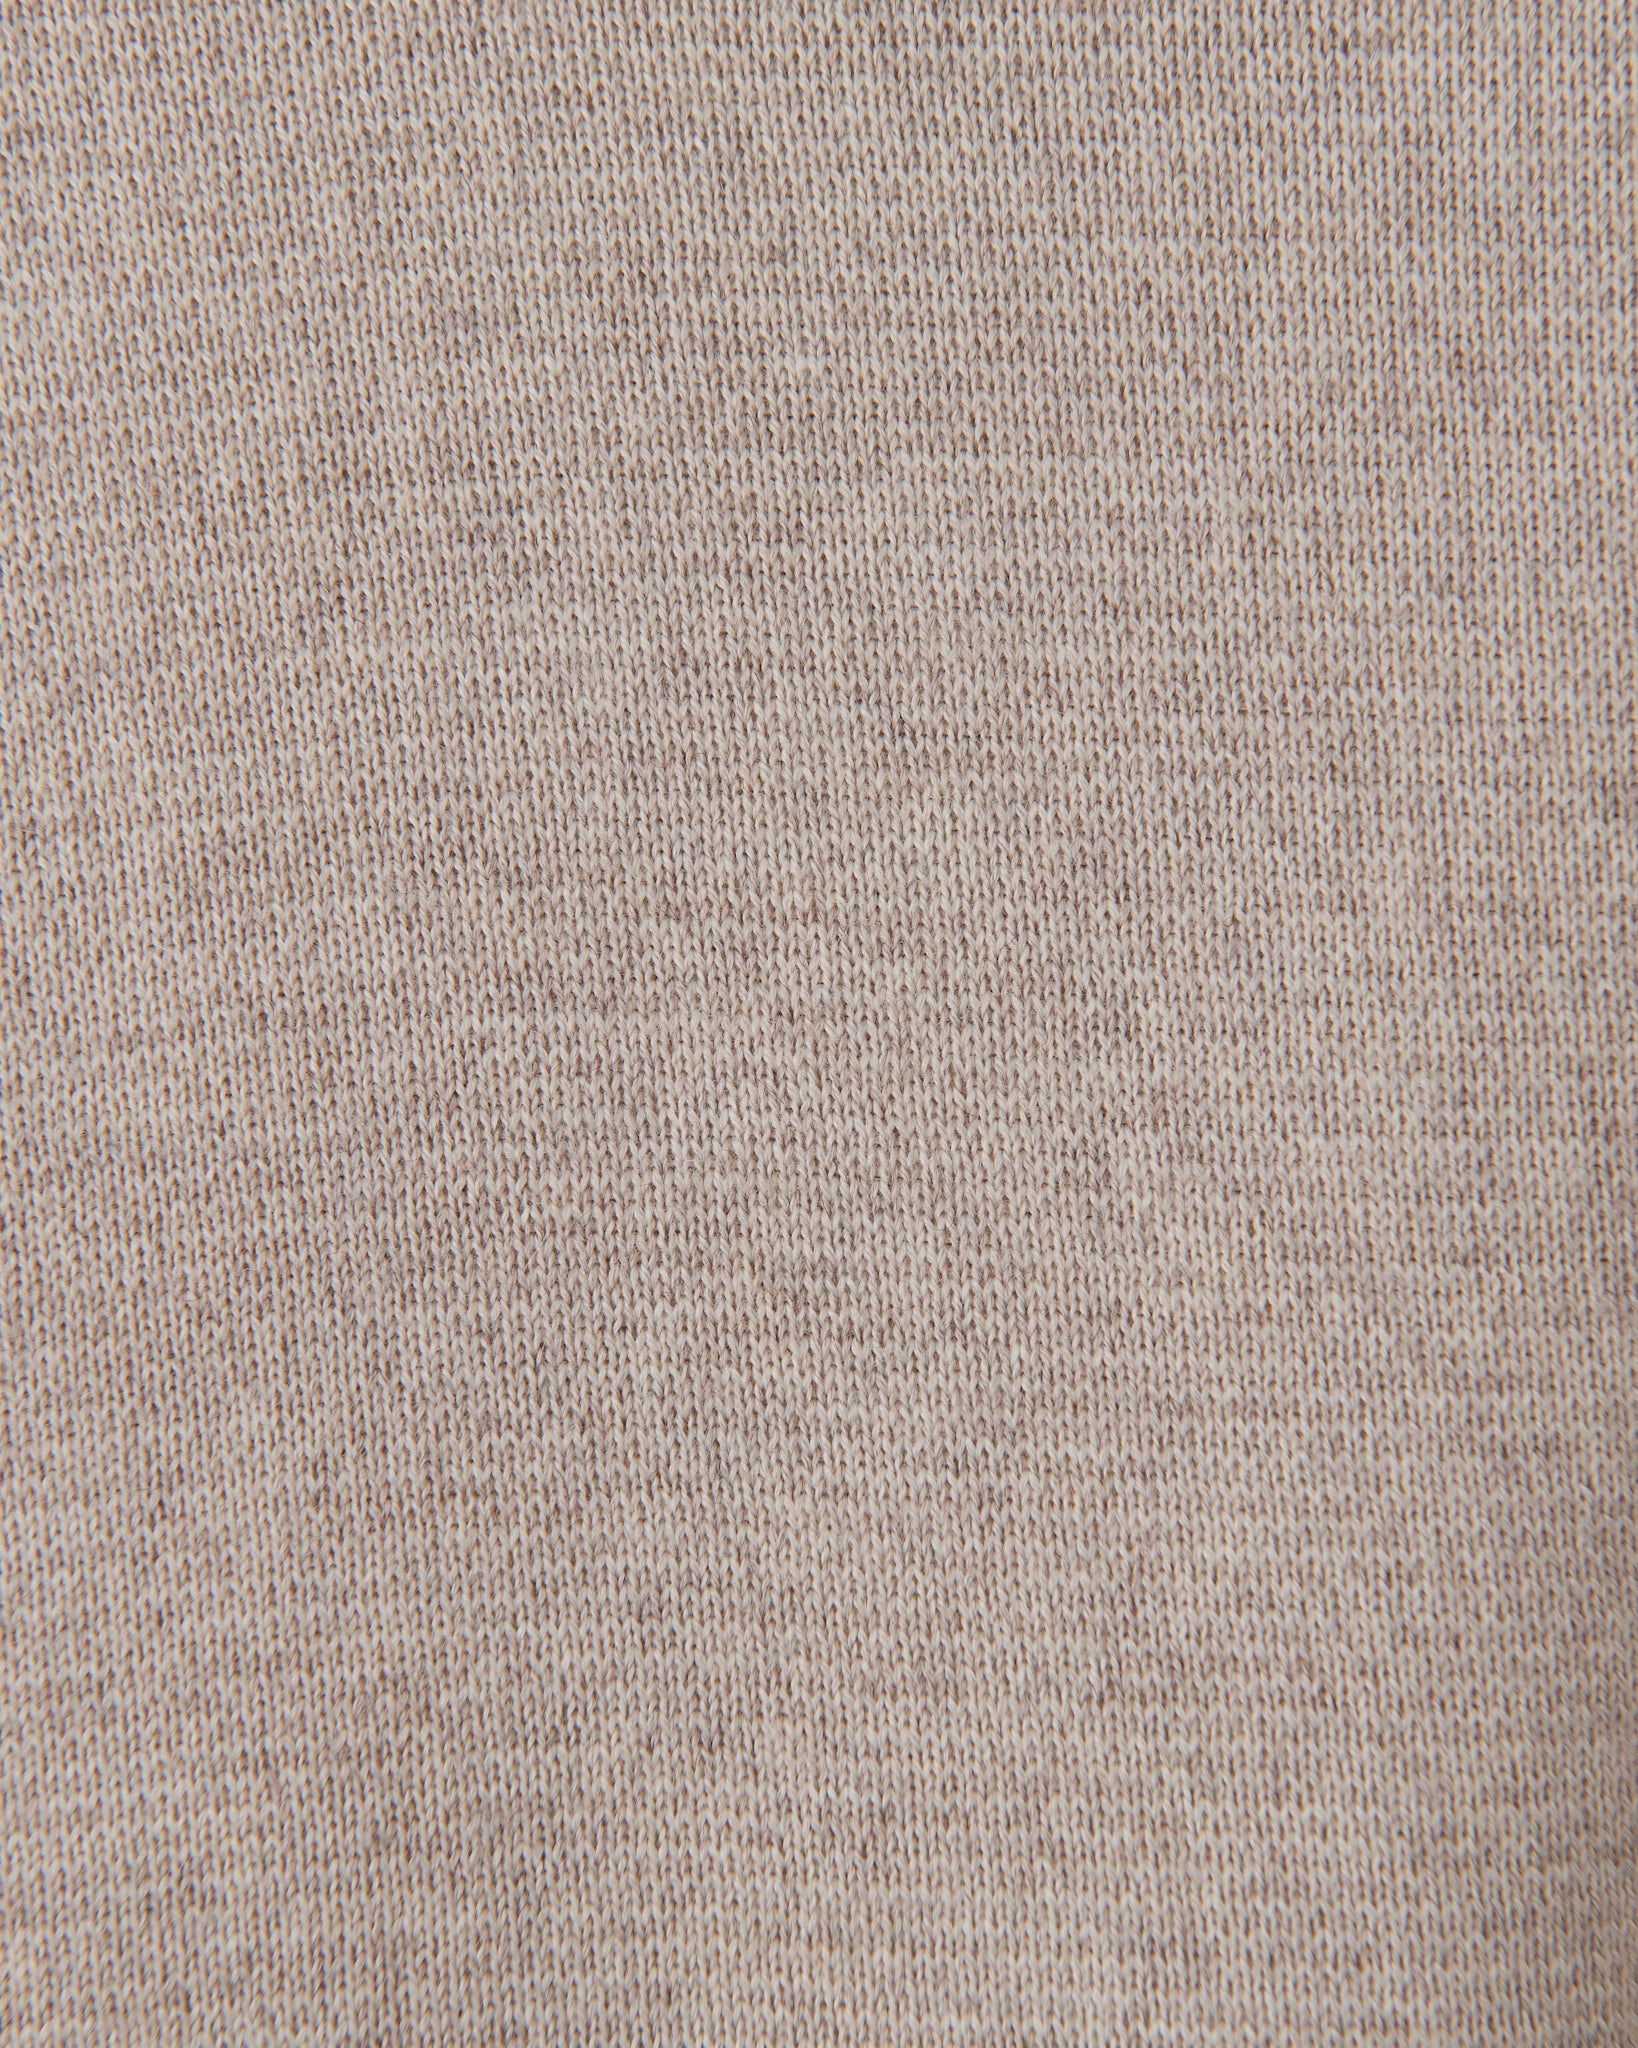 Turtleneck, Cotton / Wool Heather